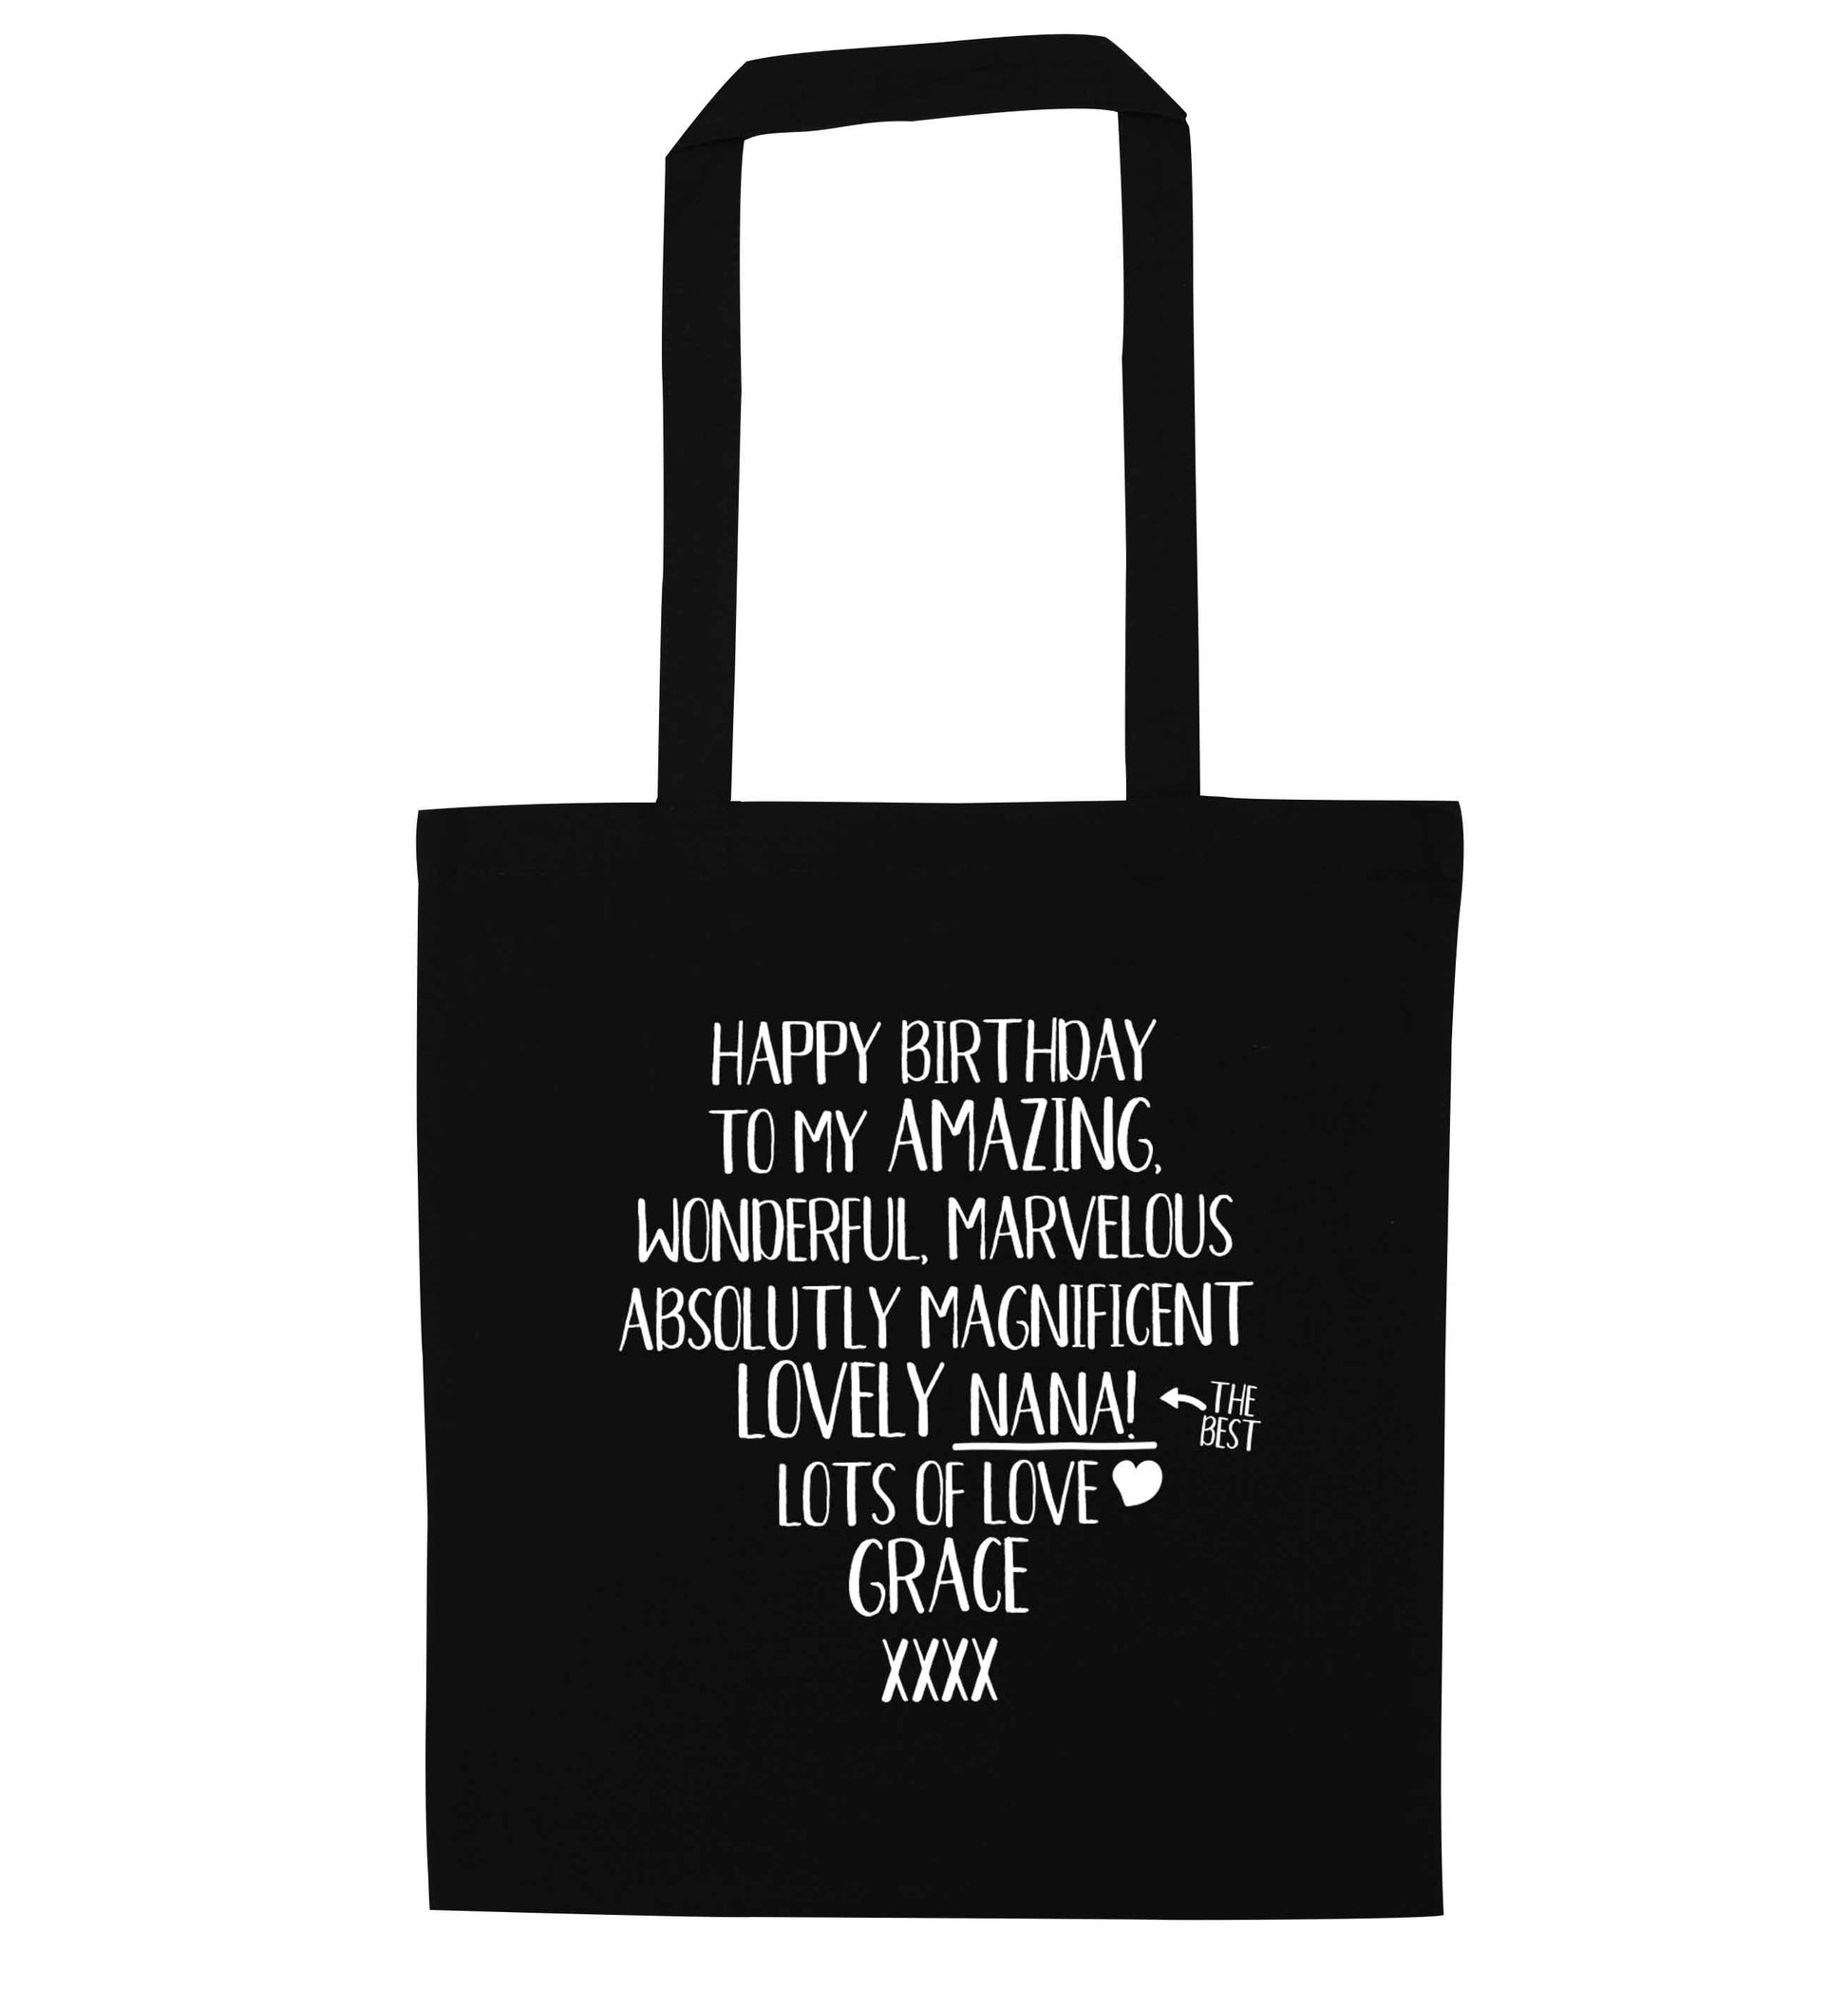 Personalised happy birthday to my amazing, wonderful, lovely nana black tote bag